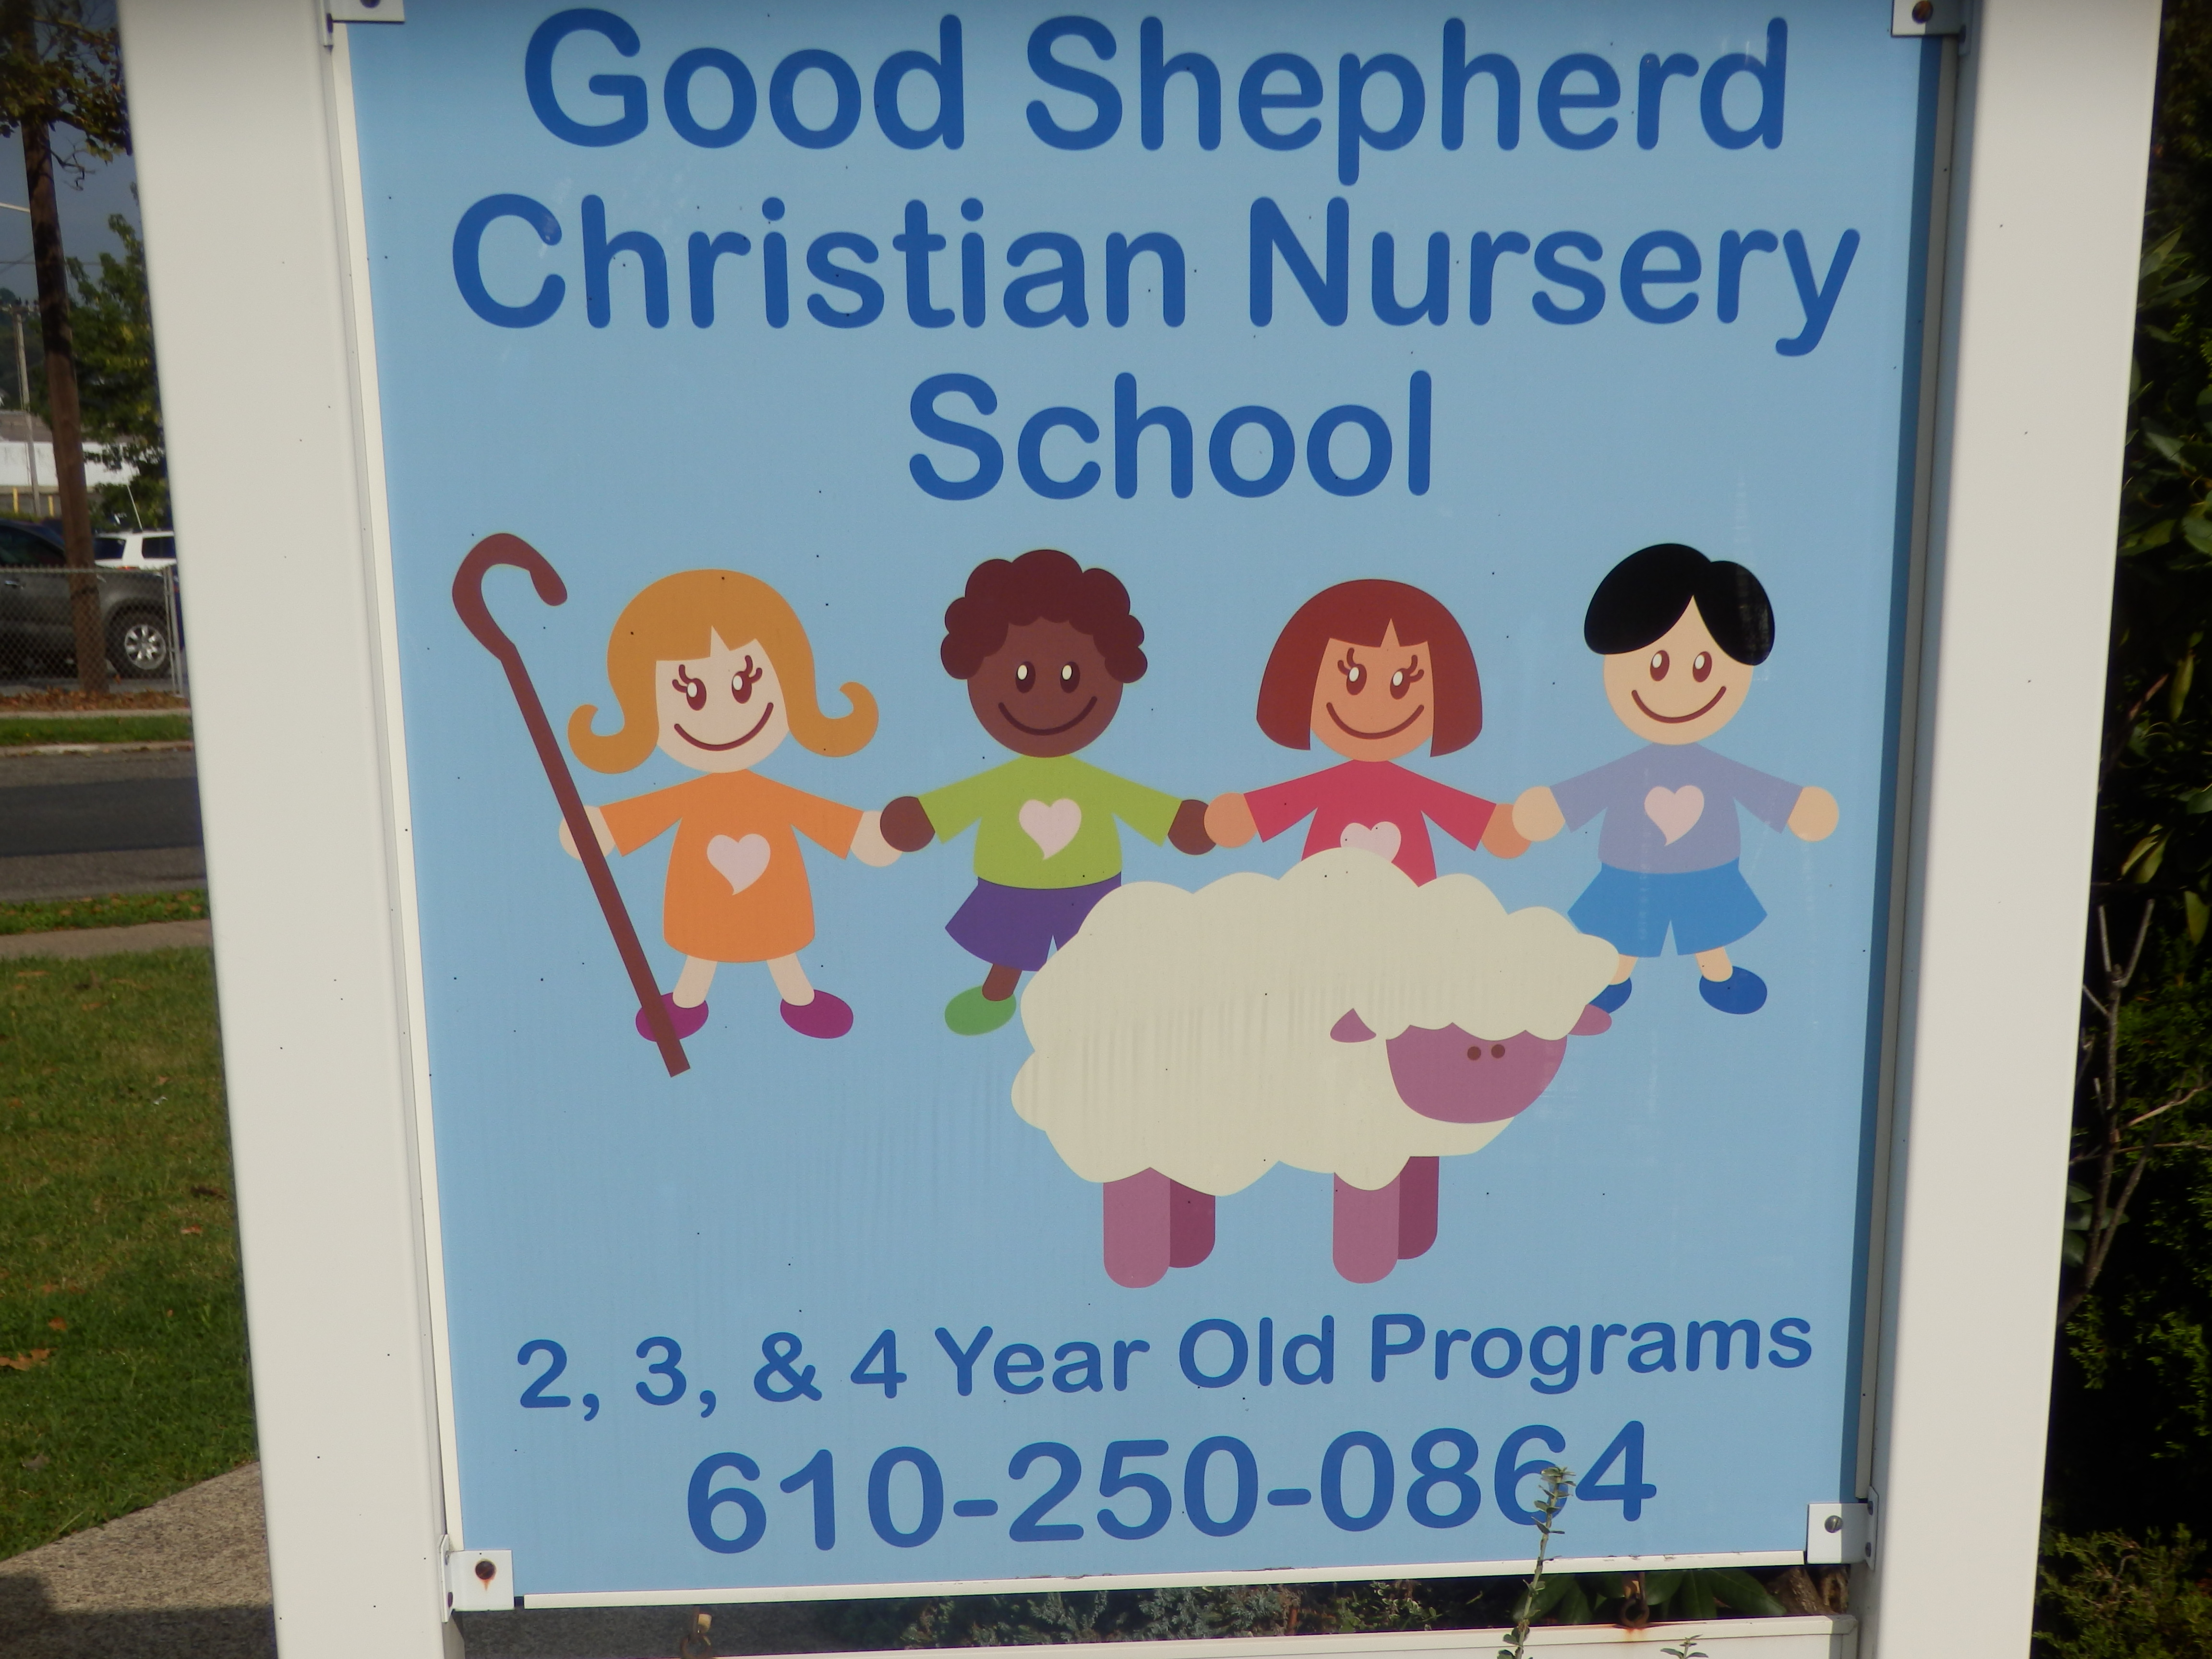 Good Shepherd Christian Nursery School